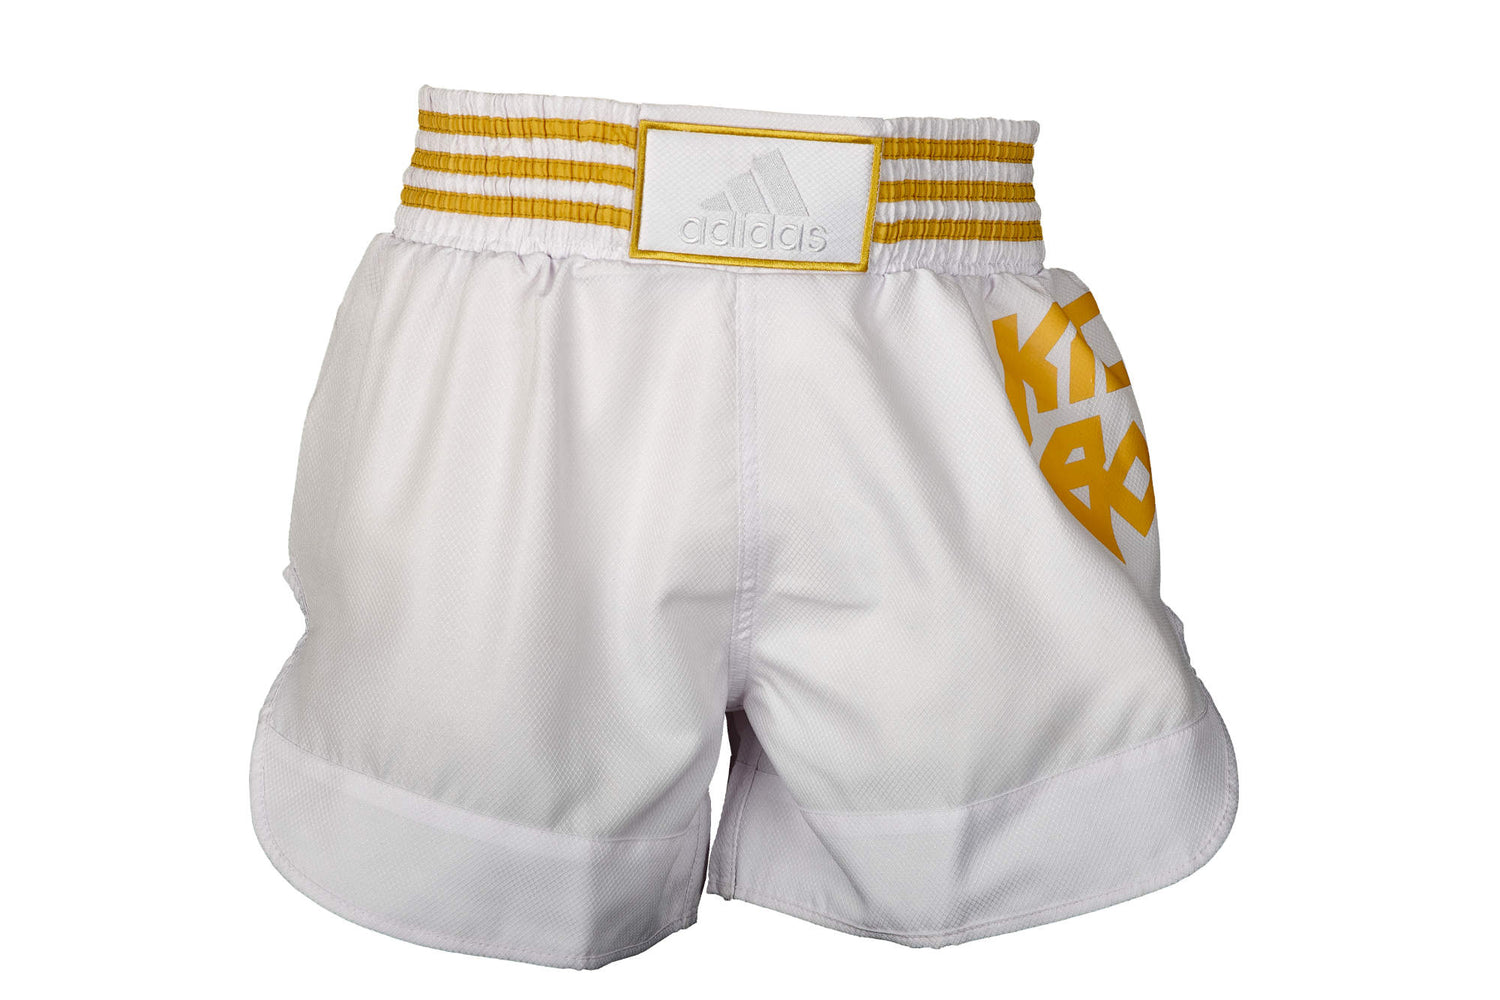 Adidas Kick Boxing Shorts, Moisture-Wicking Polyester for Intensive Training- ADISKB02